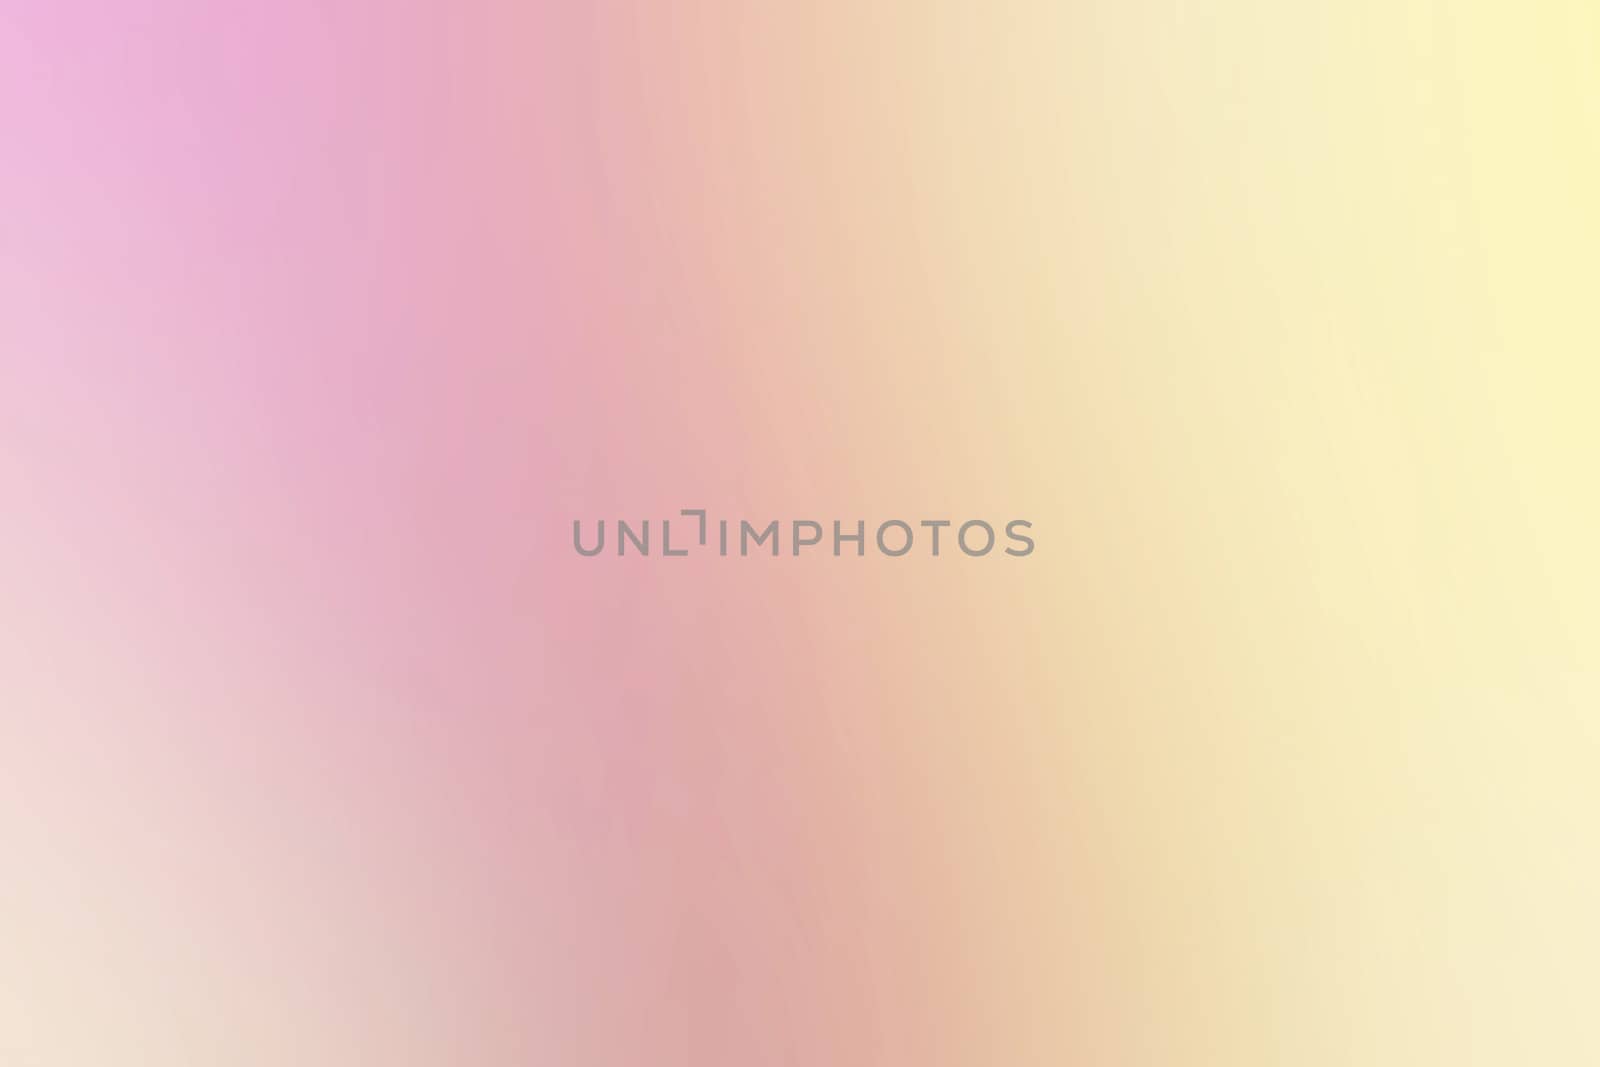 pink blurred background colors gradient, multicolored blurry texture colorful, pink background effect bright neon gradient